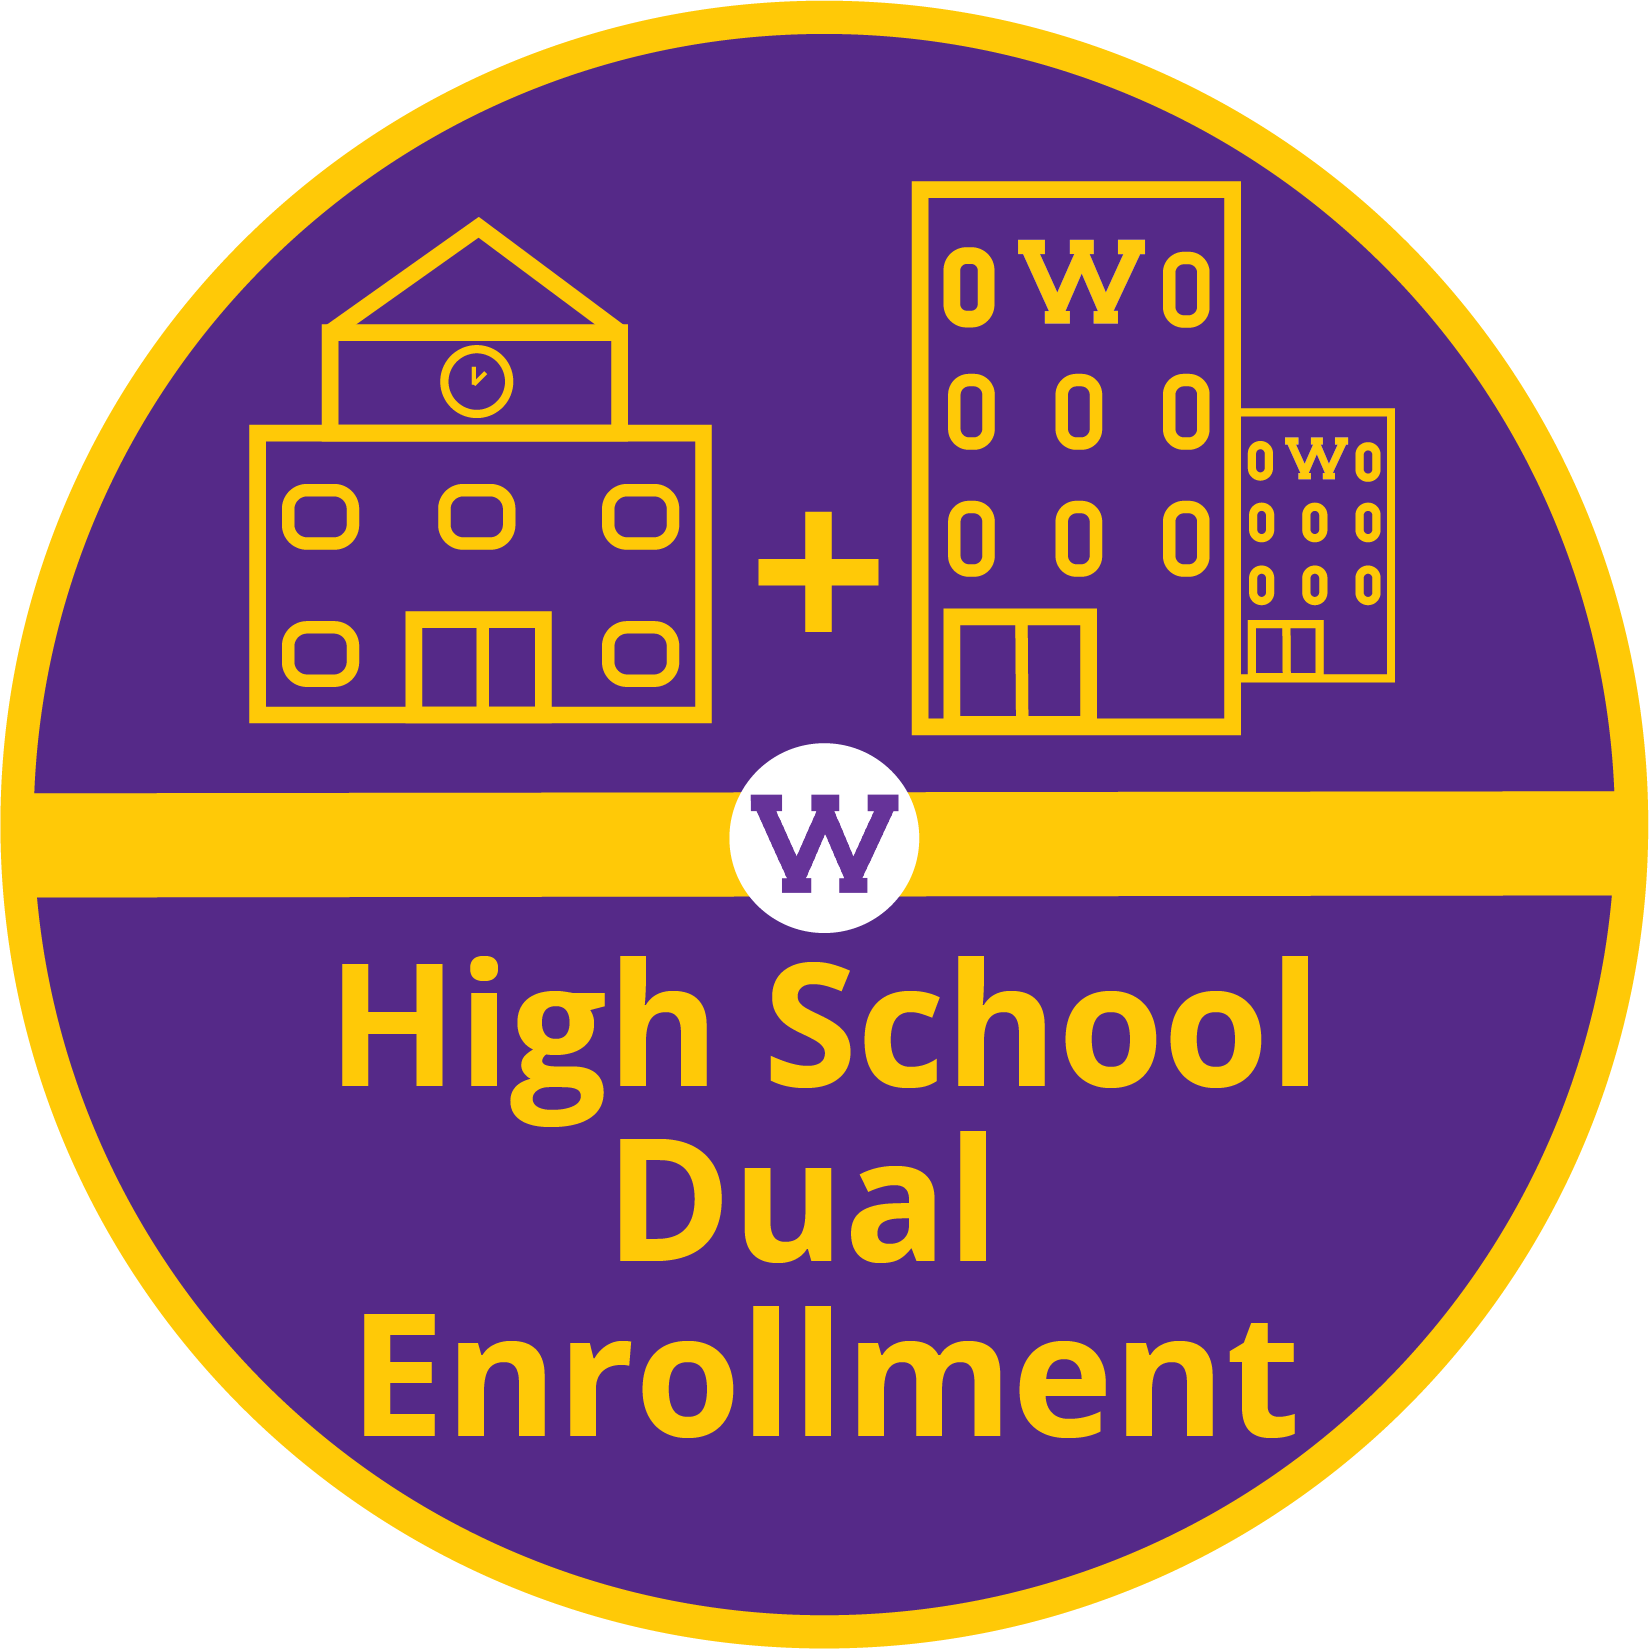 High School Dual Enrollment